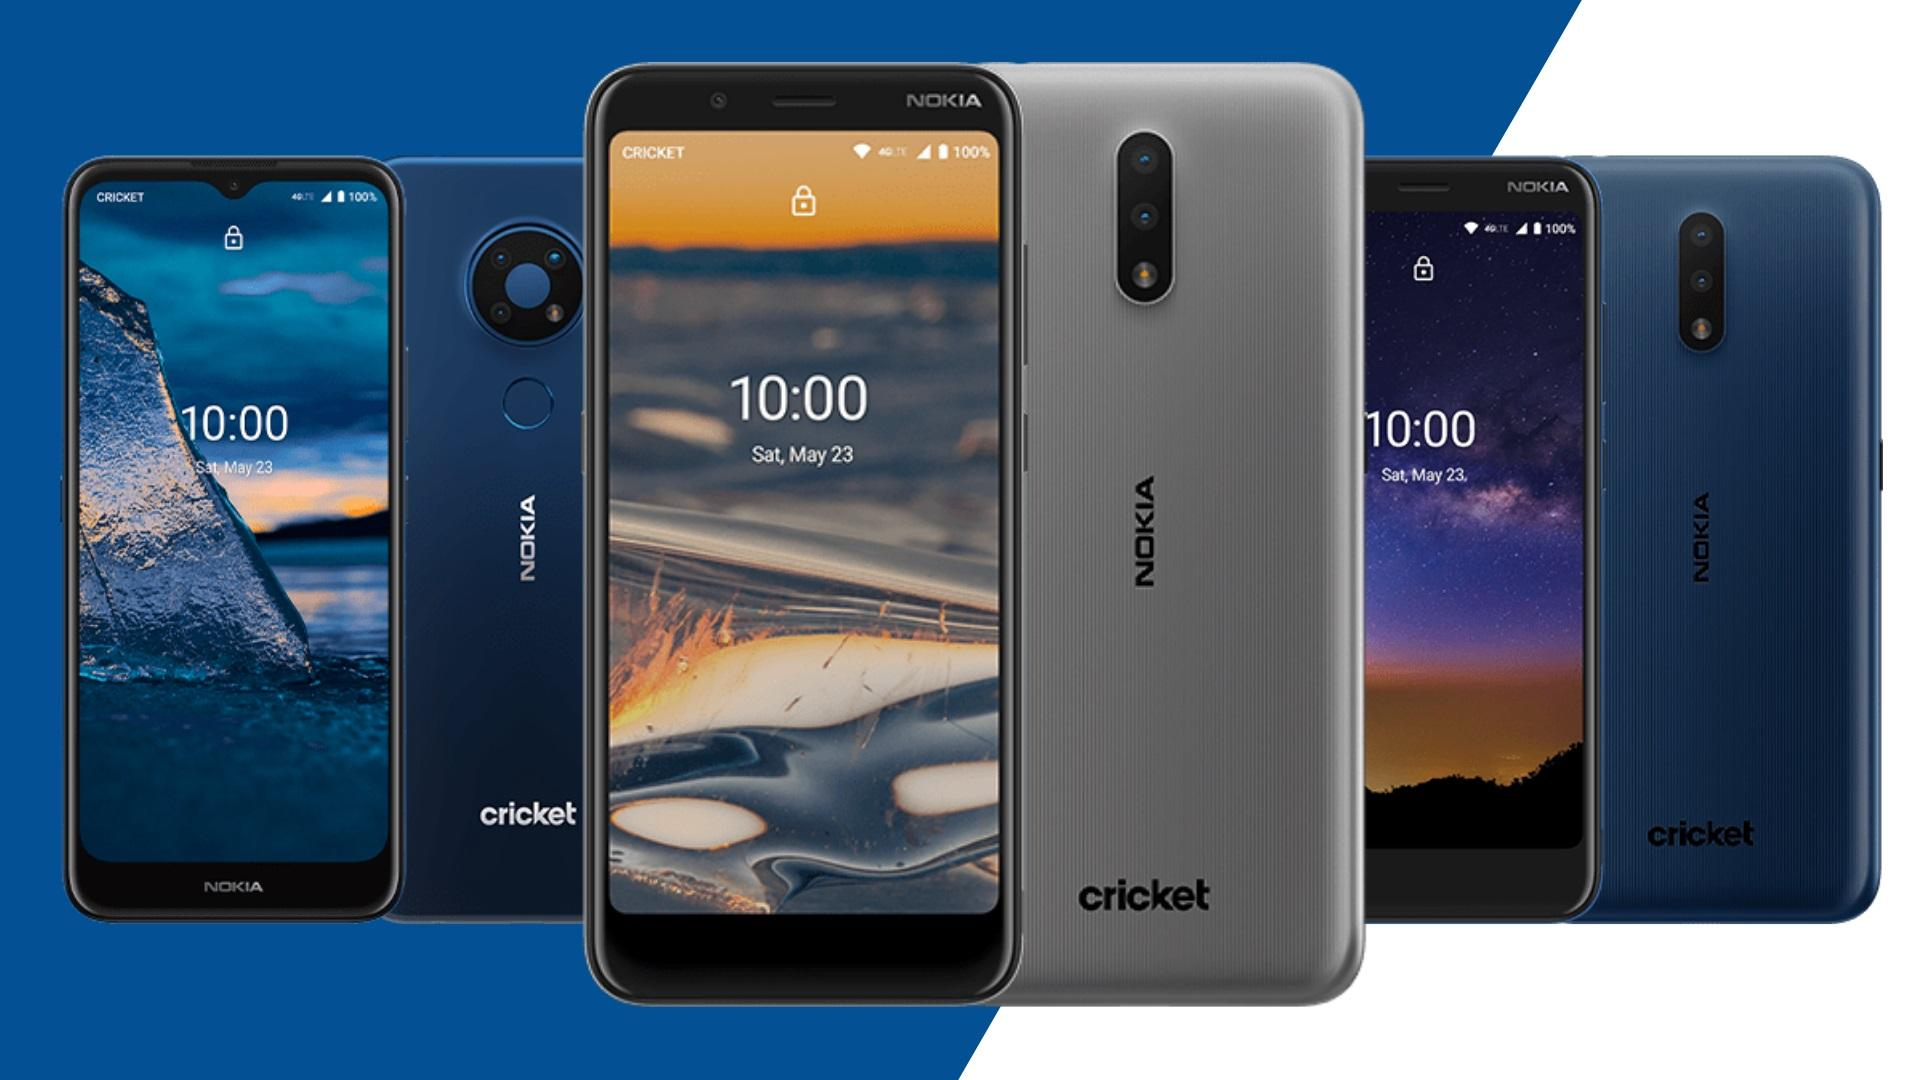 Nokia C5 Endi і Nokia С2: характеристики та ціни